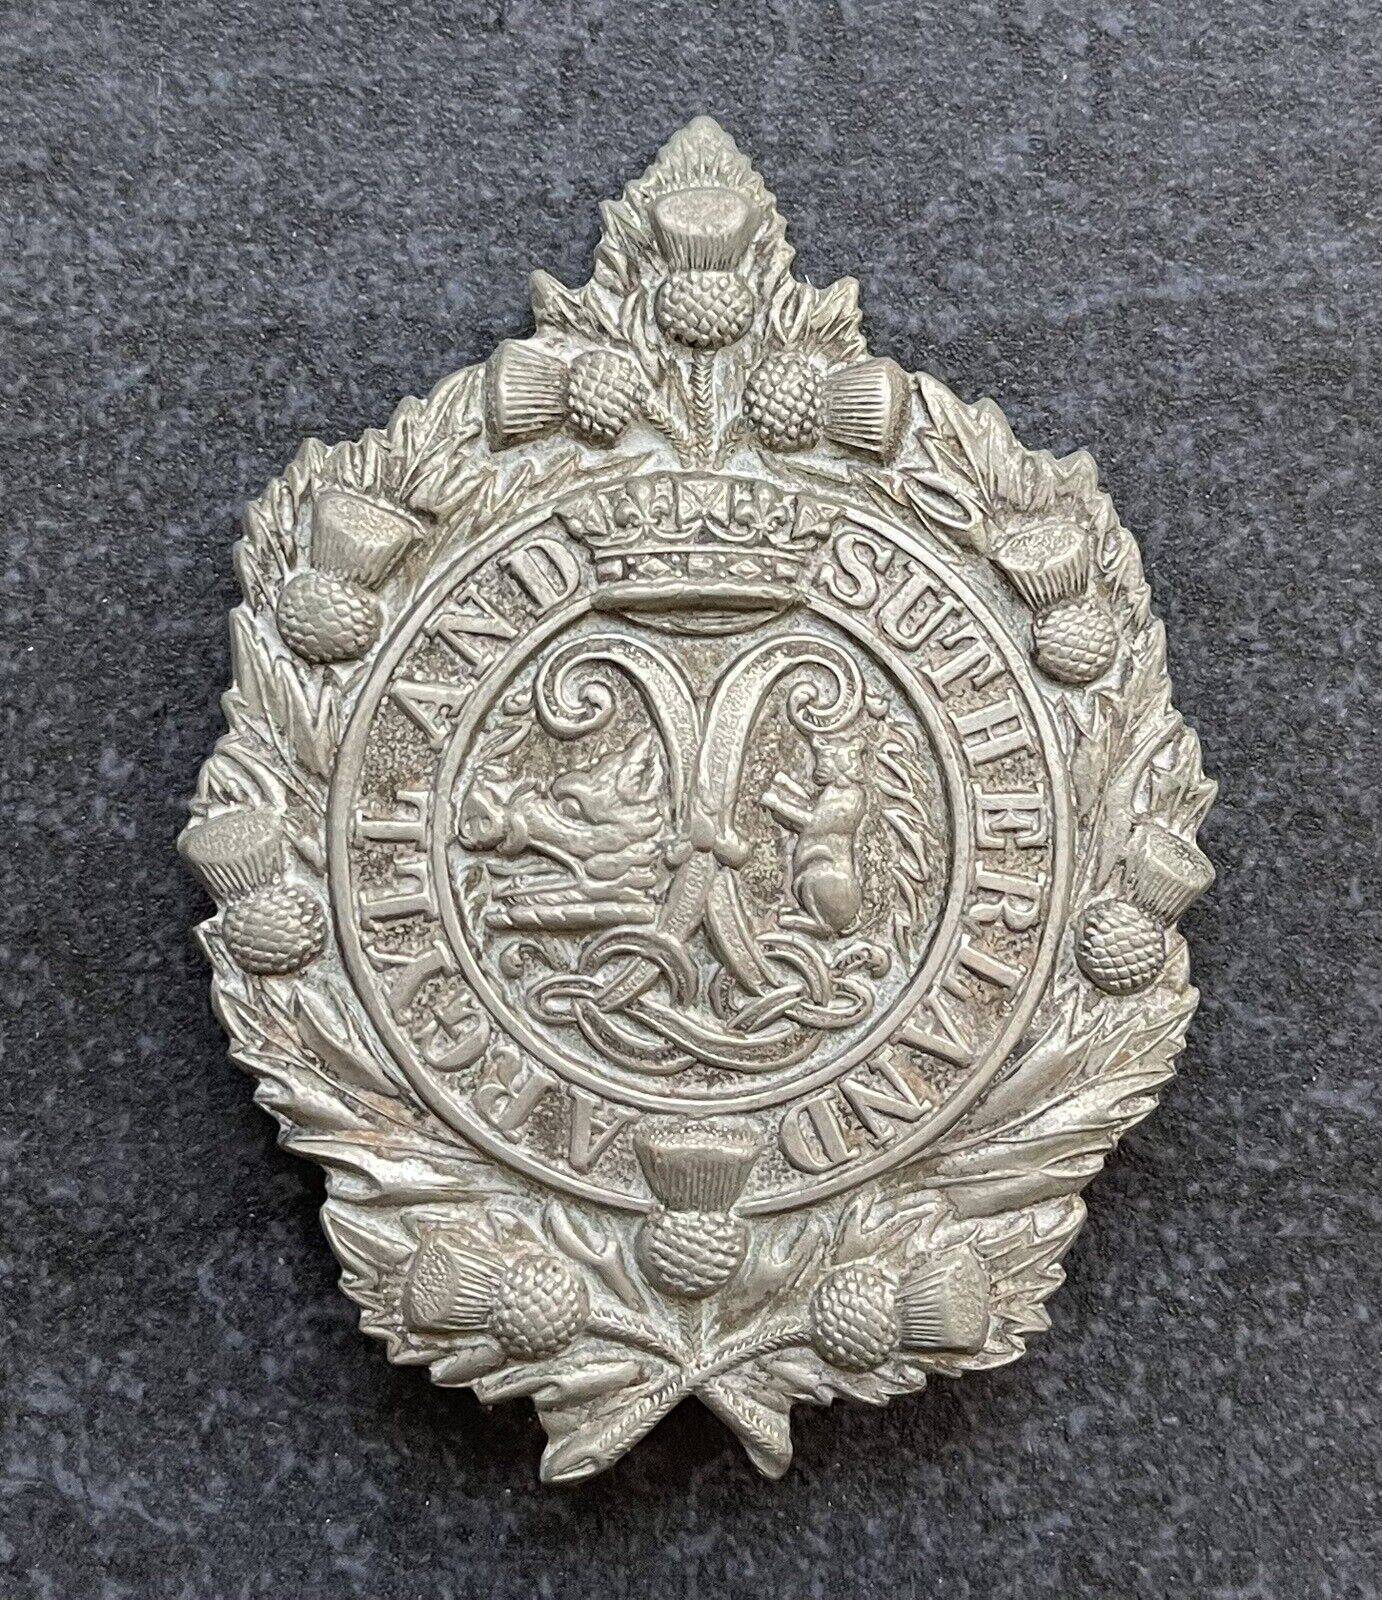 Bruce Bright Collection - Argyll & Sutherland Highlanders Original Cap Badge